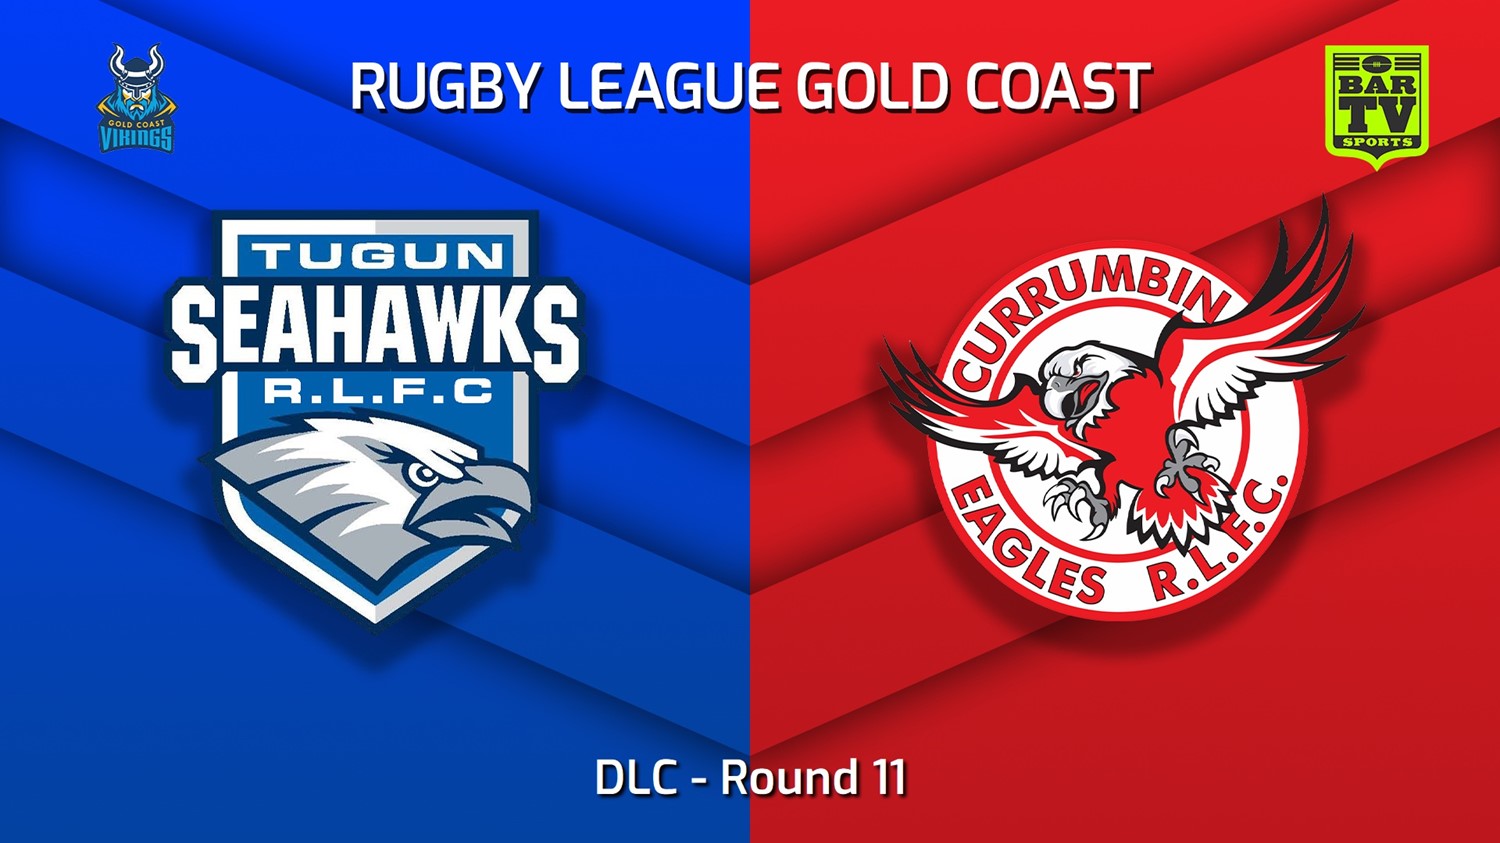 220618-Gold Coast Round 11 - DLC - Tugun Seahawks v Currumbin Eagles Slate Image